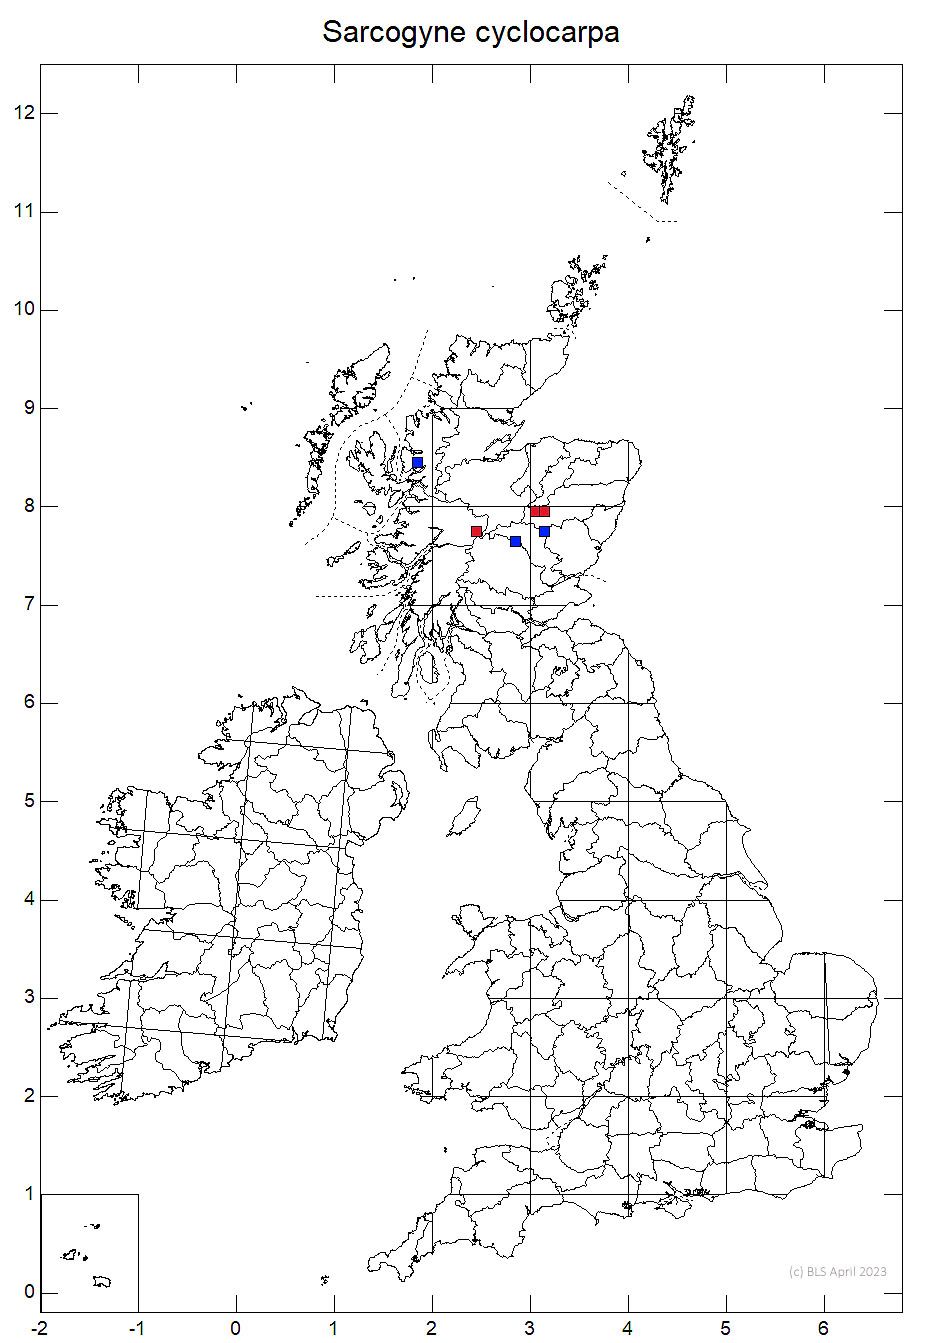 Sarcogyne cyclocarpa 10km distributiopn map